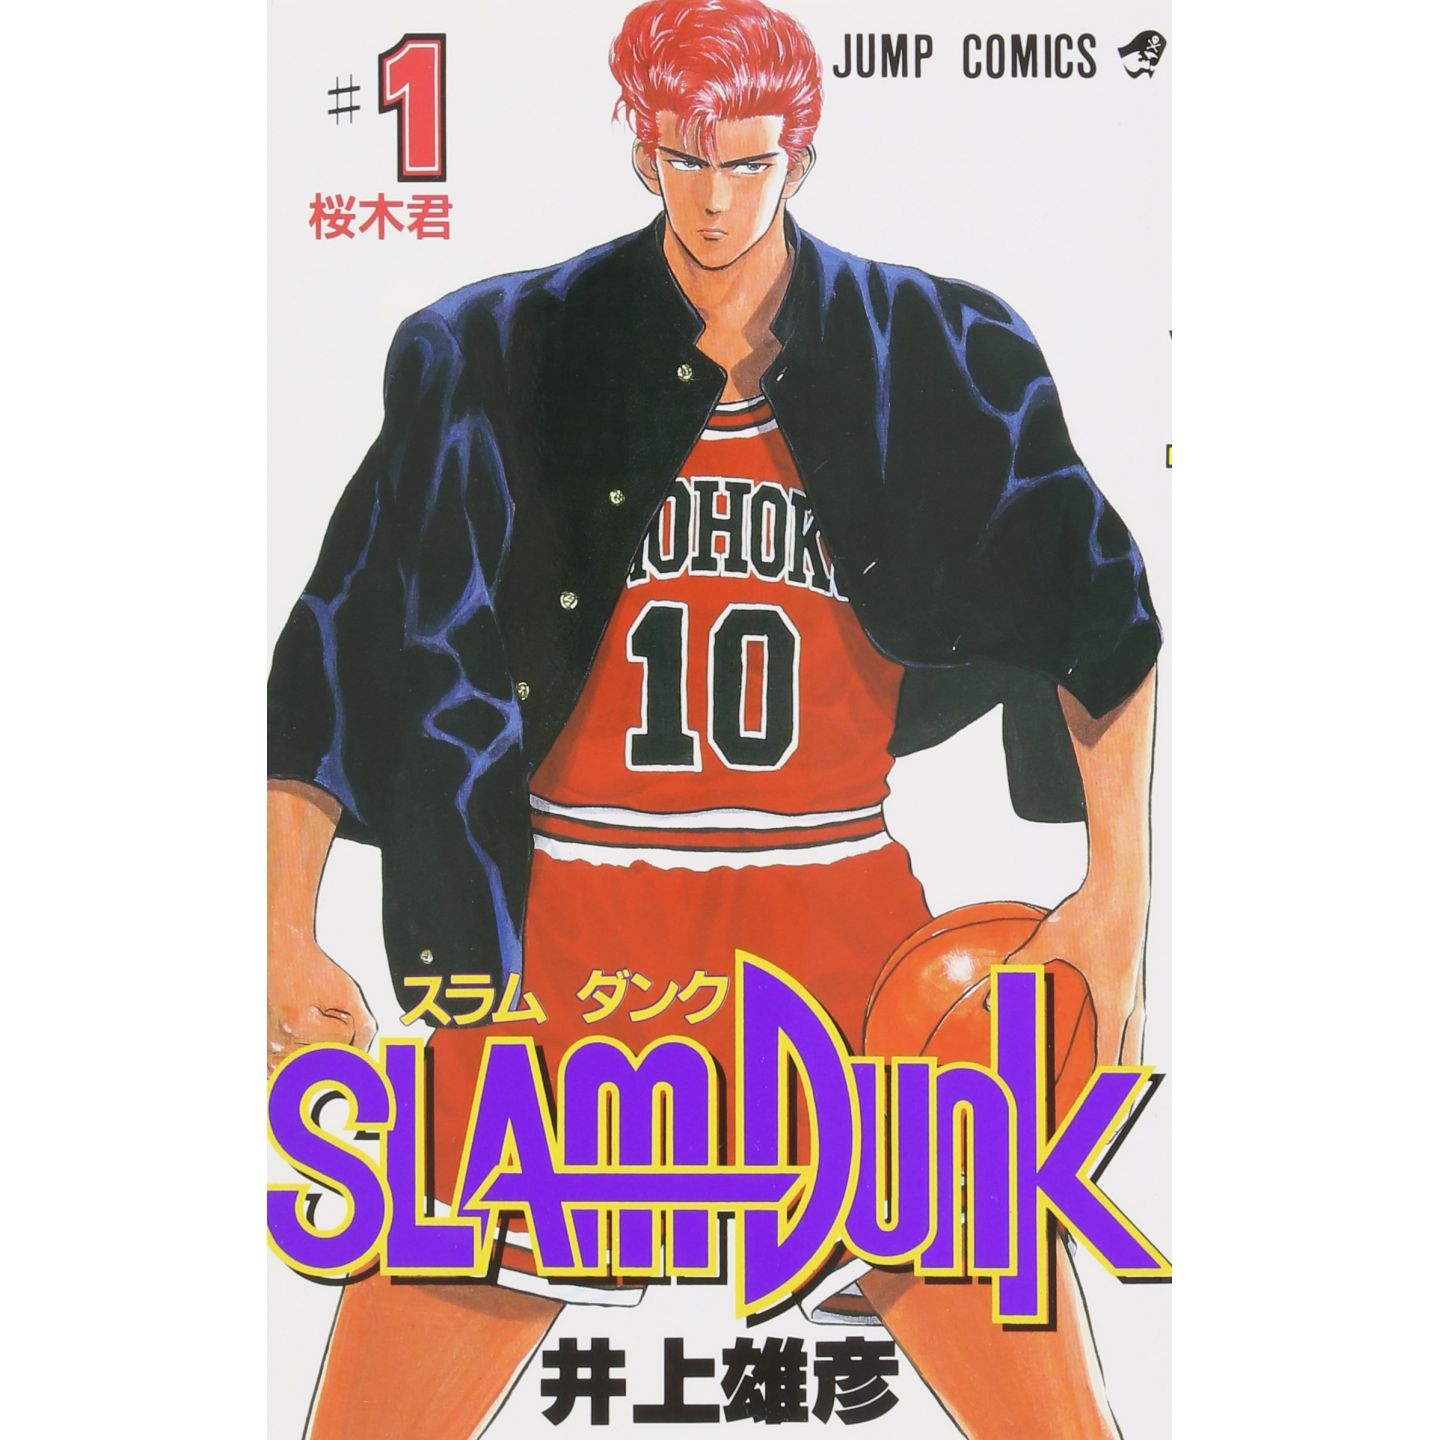 Slam dunk #1〜31 (湘北高校バスケットボール部) - 全巻セット